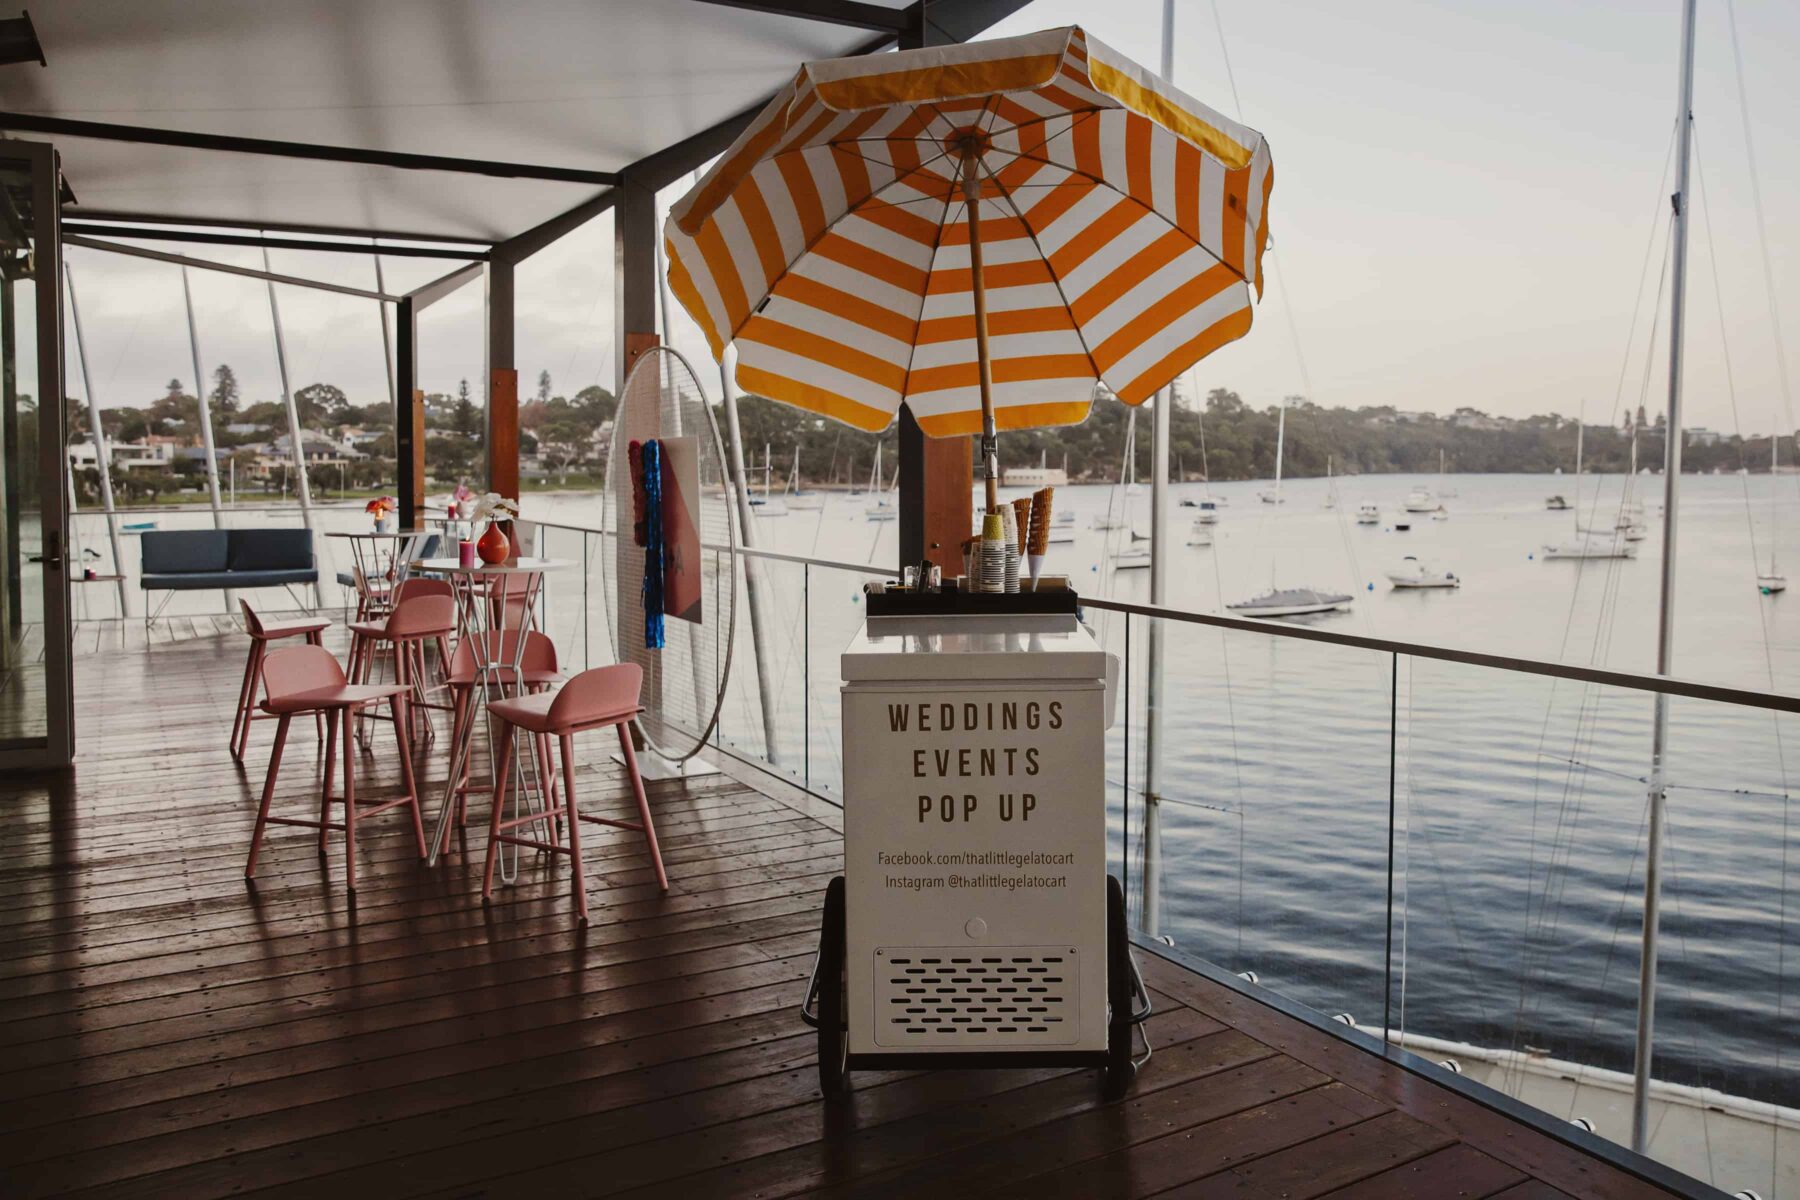 Perth wedding gelato cart